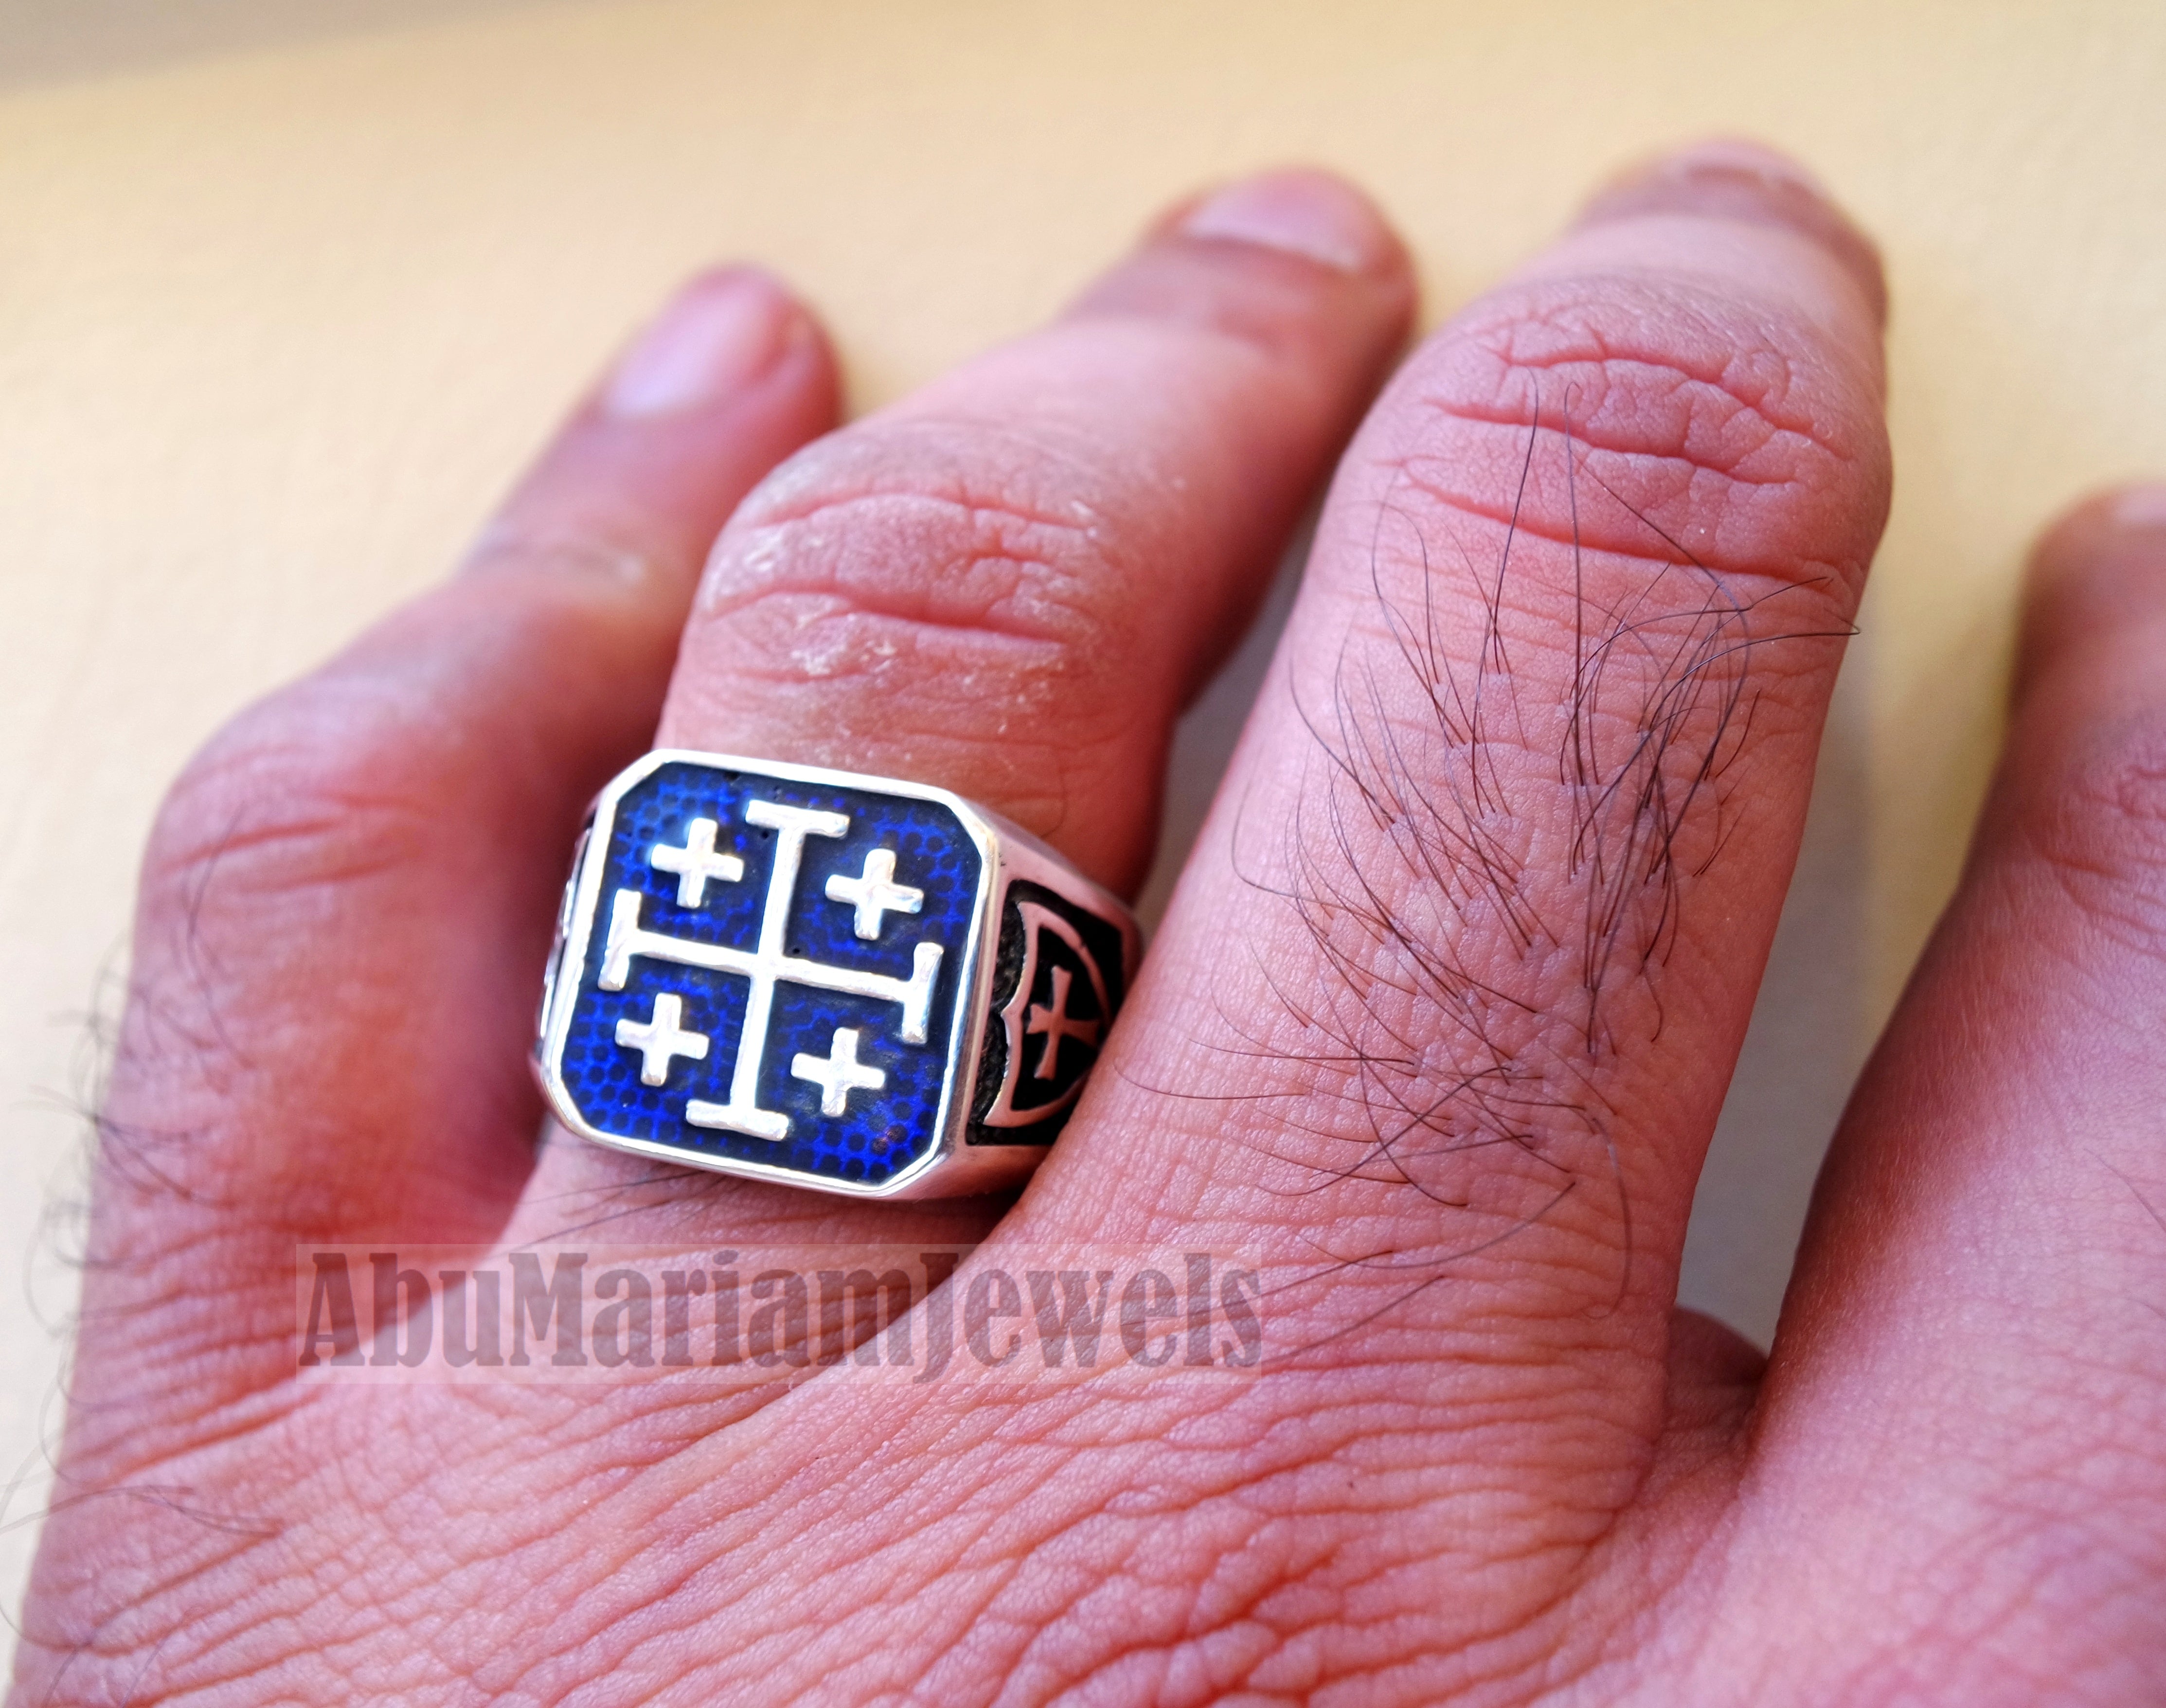 Jerusalem Cross ring christ christian symbol sterling silver 925 blue enamel man gift jewelry fast shipping square shape Catholic Orthodox